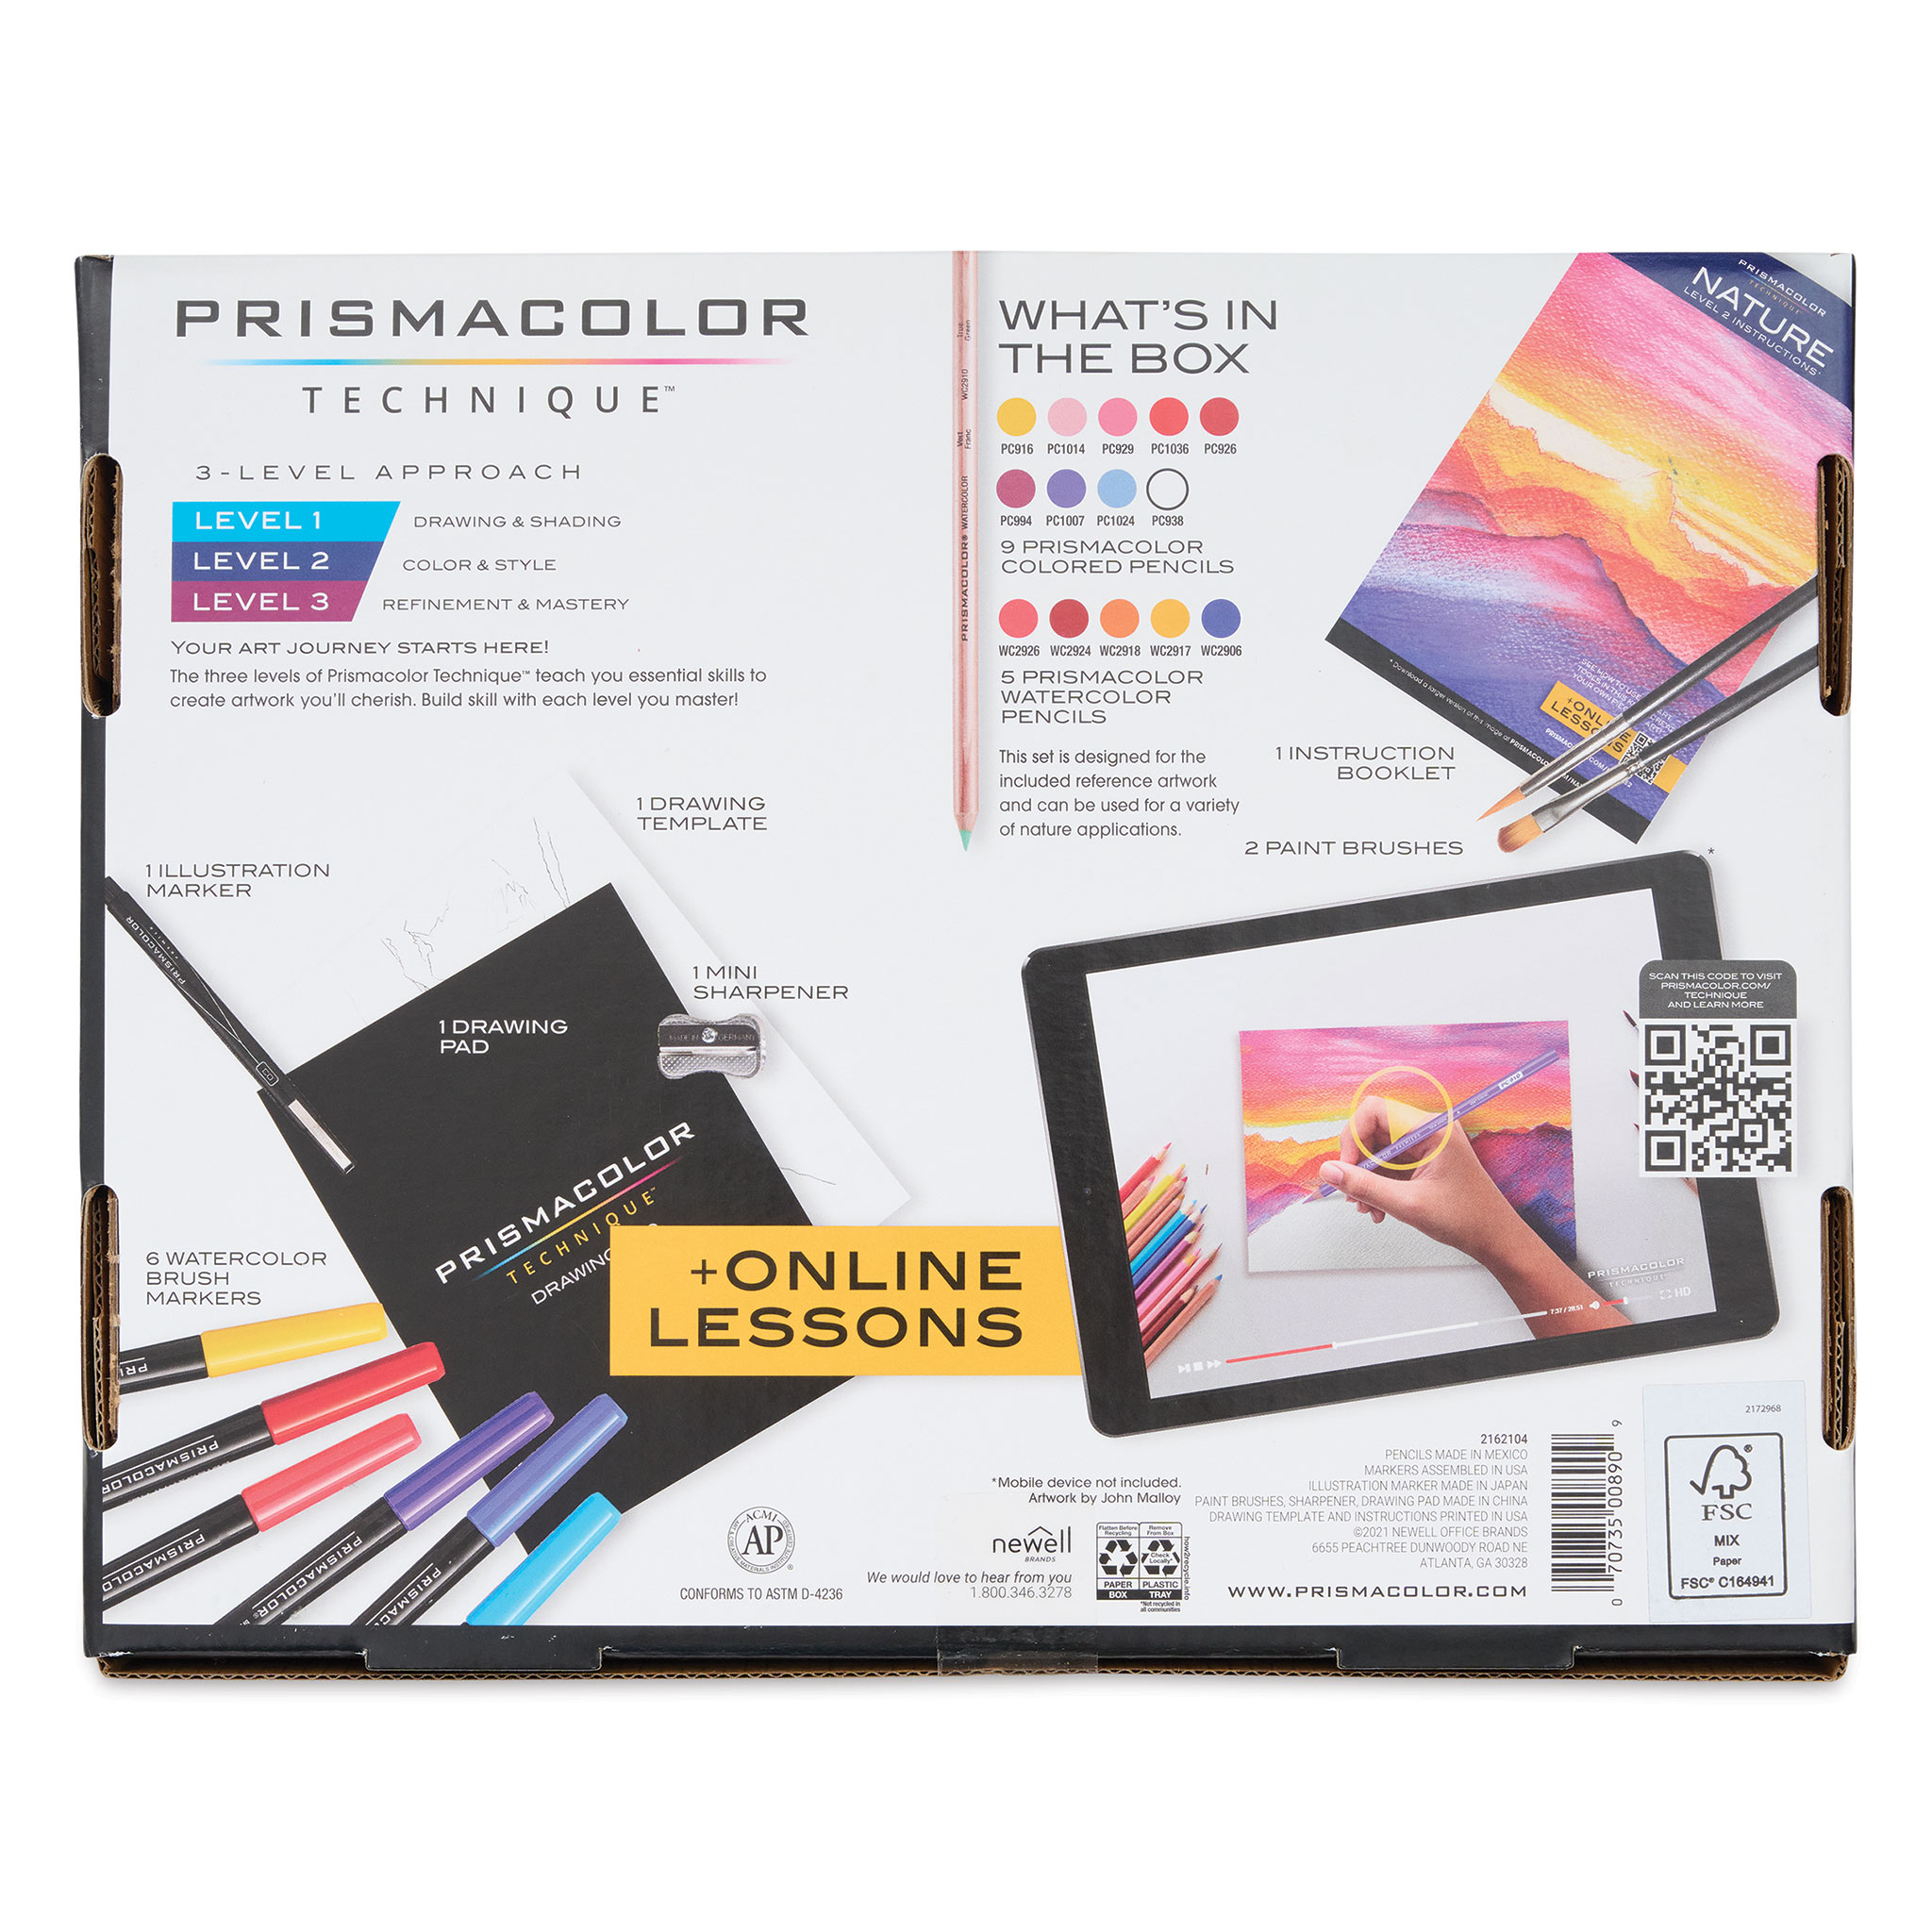 Prismacolor Technique 26pk Nature Drawing Pencils with Digital Lessons 26  ct